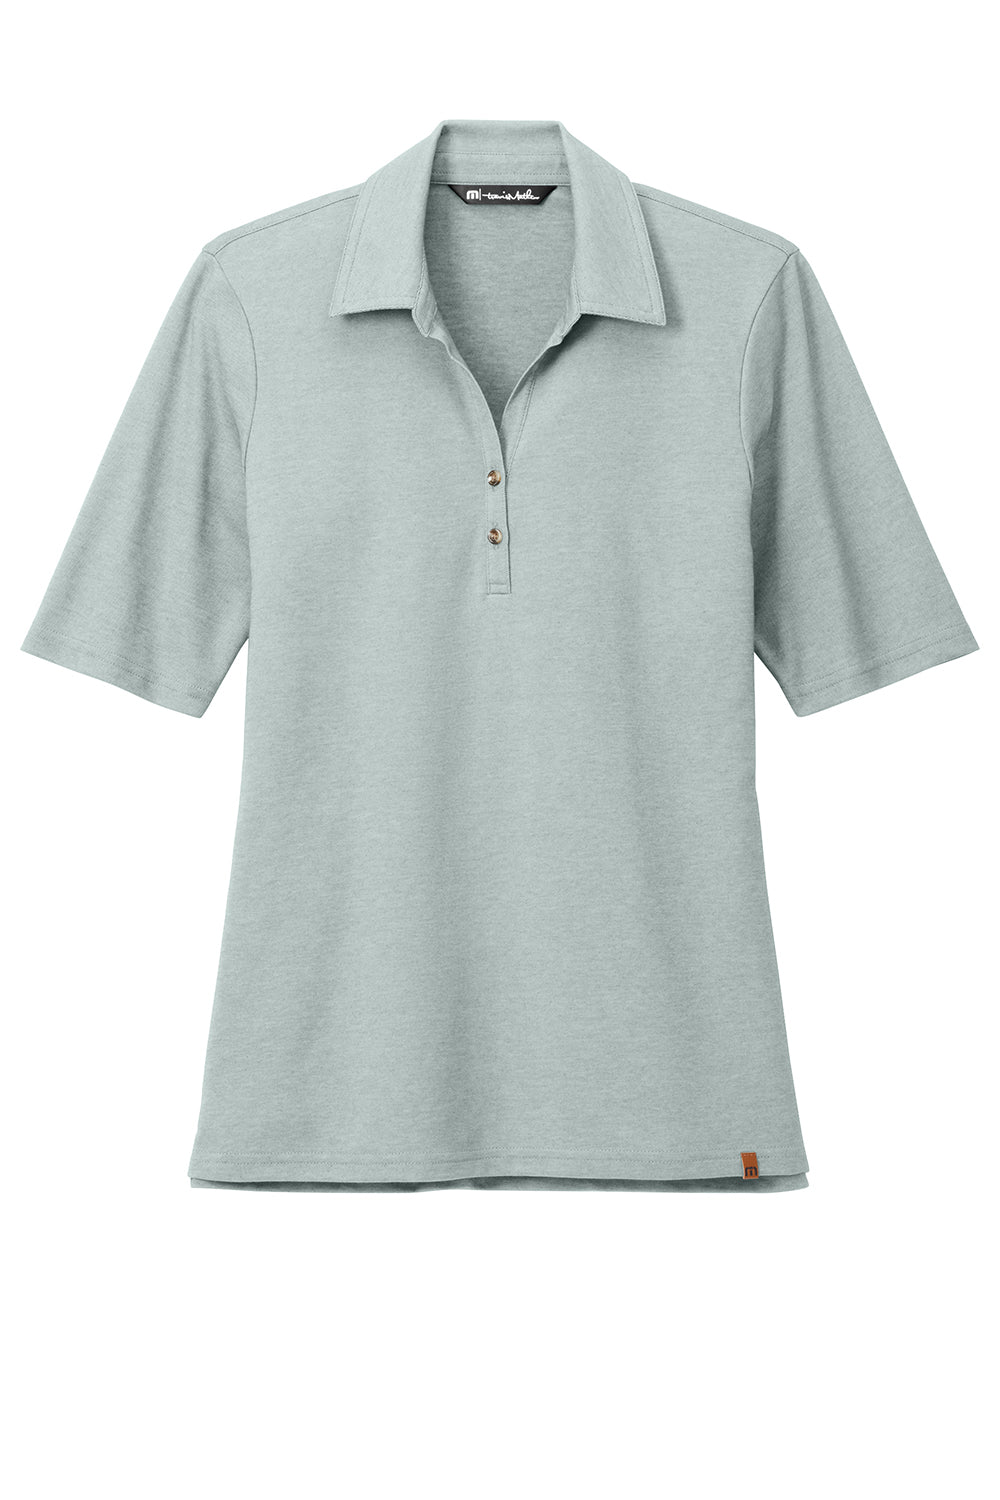 TravisMathew TM1LD004 Womens Sunsetters Wrinkle Resistant Short Sleeve Polo Shirt Heather Balsam Green Flat Front